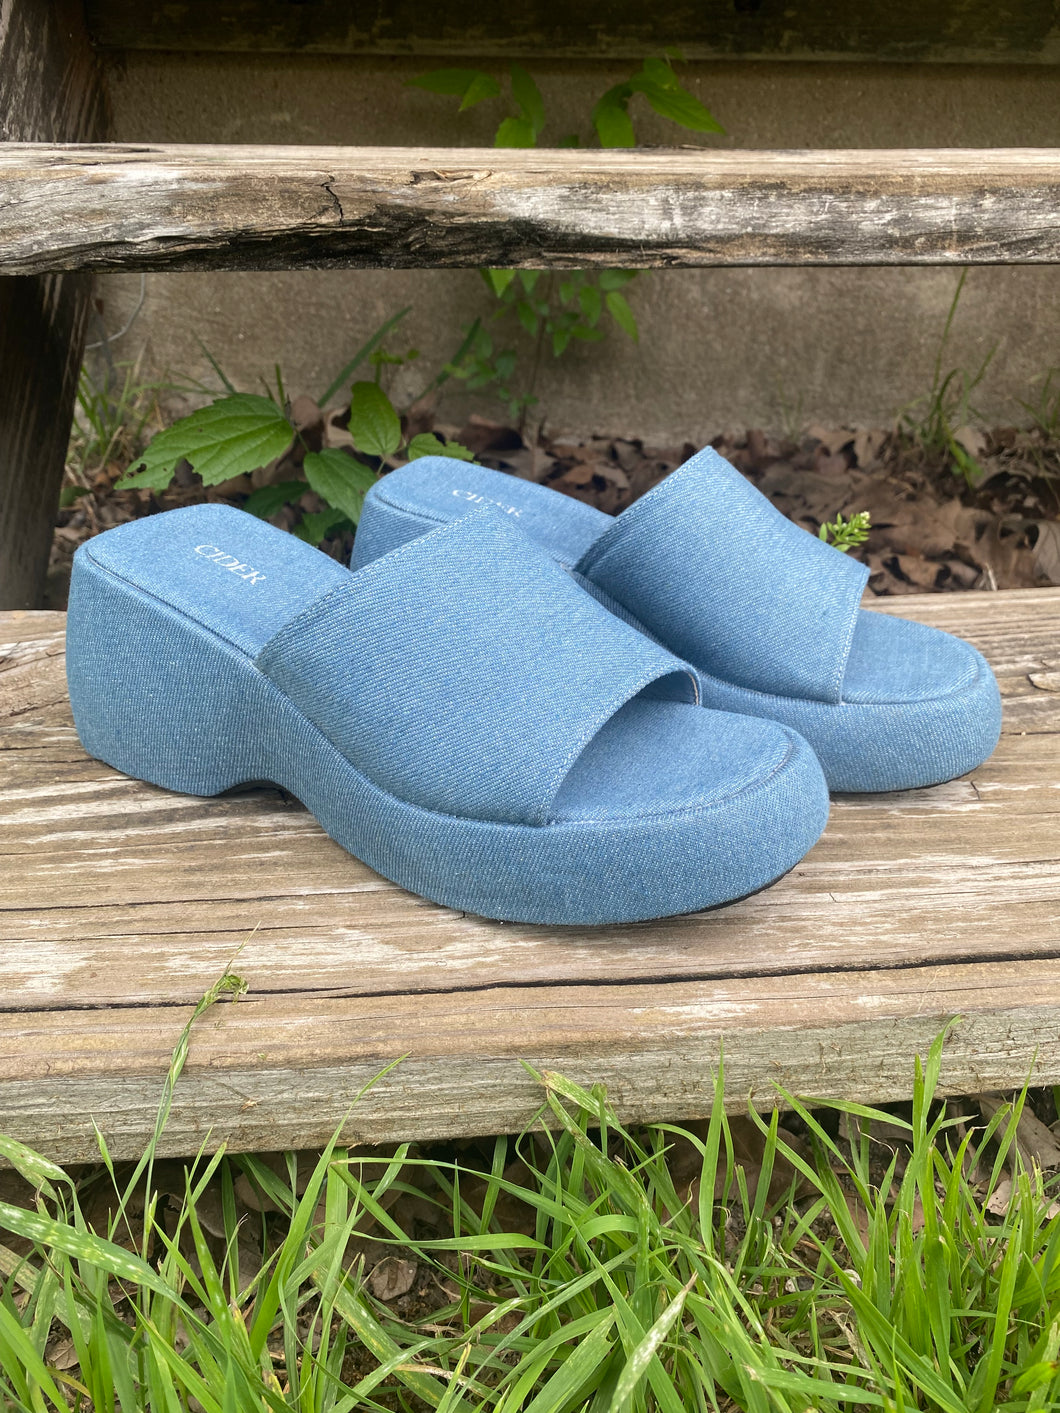 modern chunky denim sandals- size 8